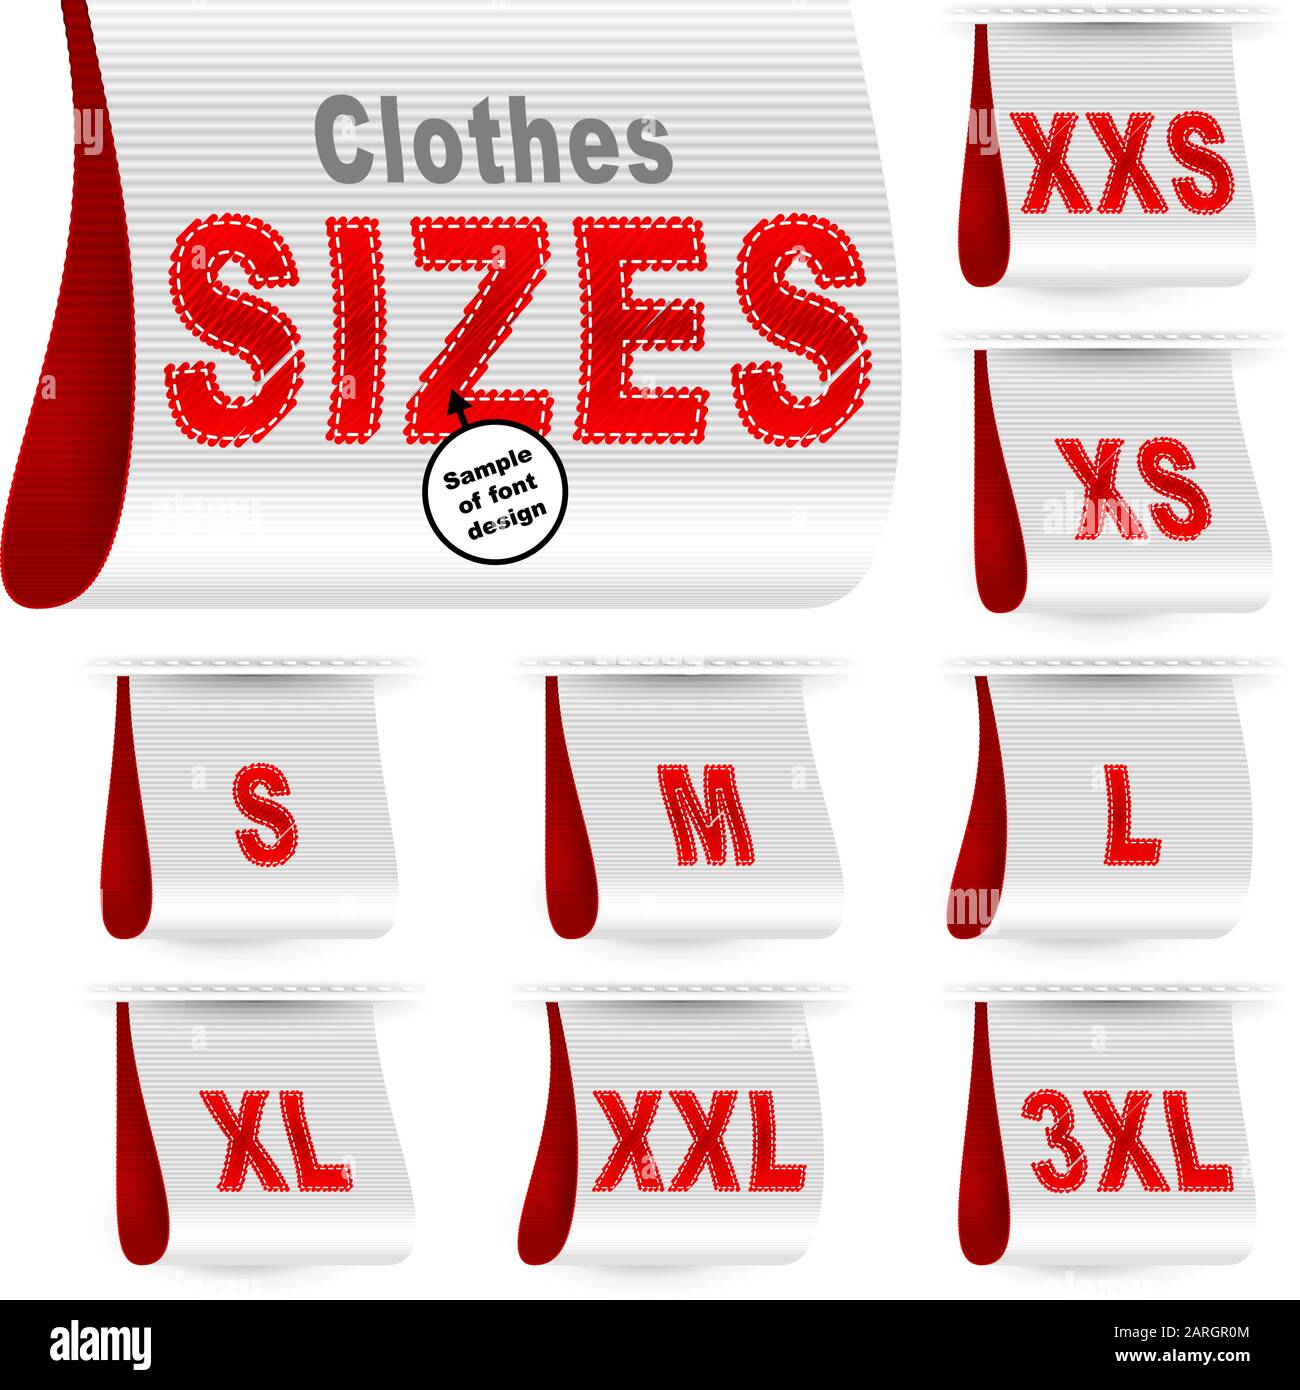 Clothes size labels with standard designation symbols of garment dimensions  for customers - XXS, XS, S, M, L, XL, XXL, XXXL Stock Vector Image & Art -  Alamy